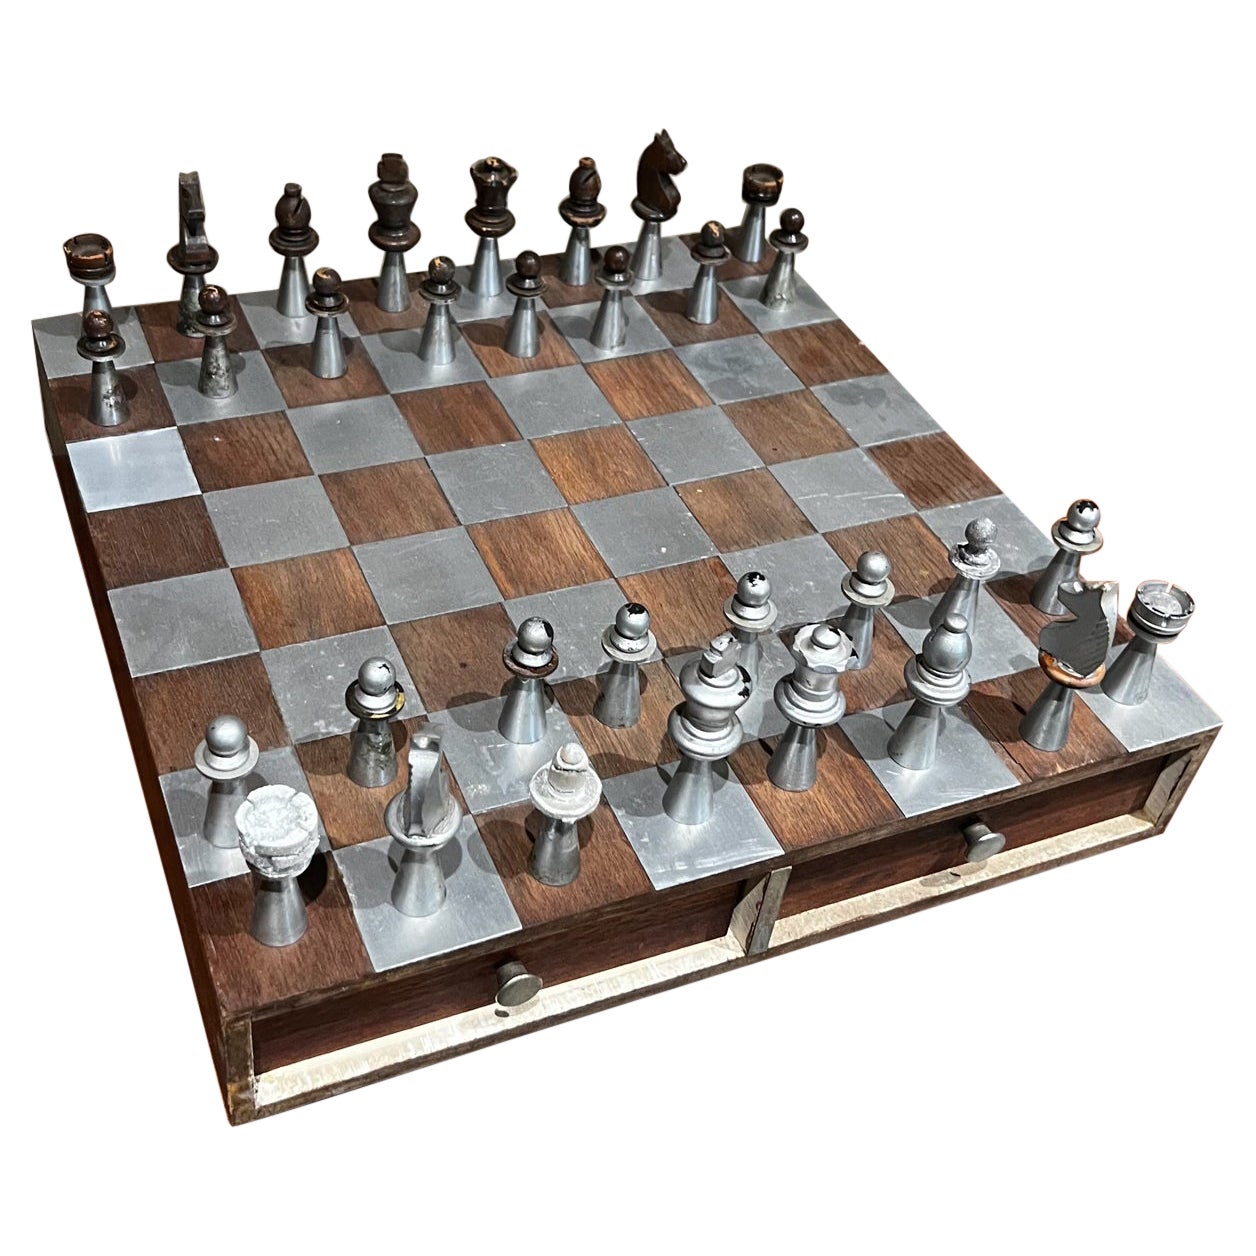 1960s Modernist Striking Chess Game Set Aluminum and Walnut Wood